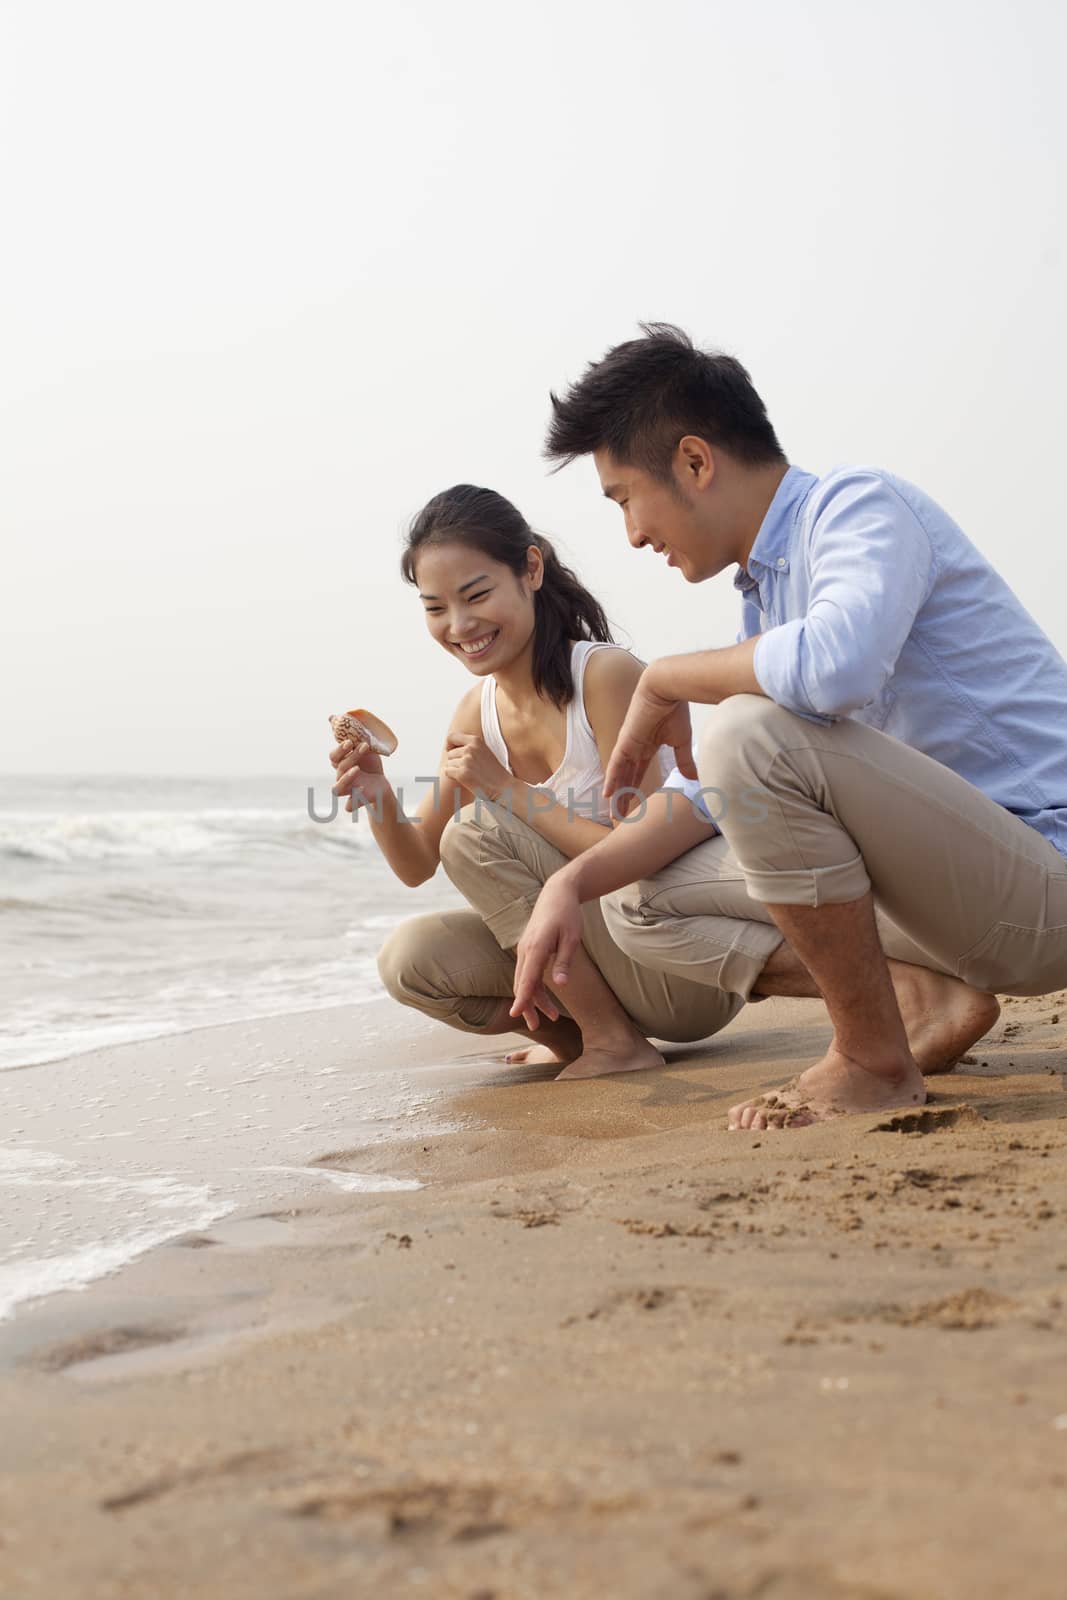 Young couple looking at seashell at the waters edge, China